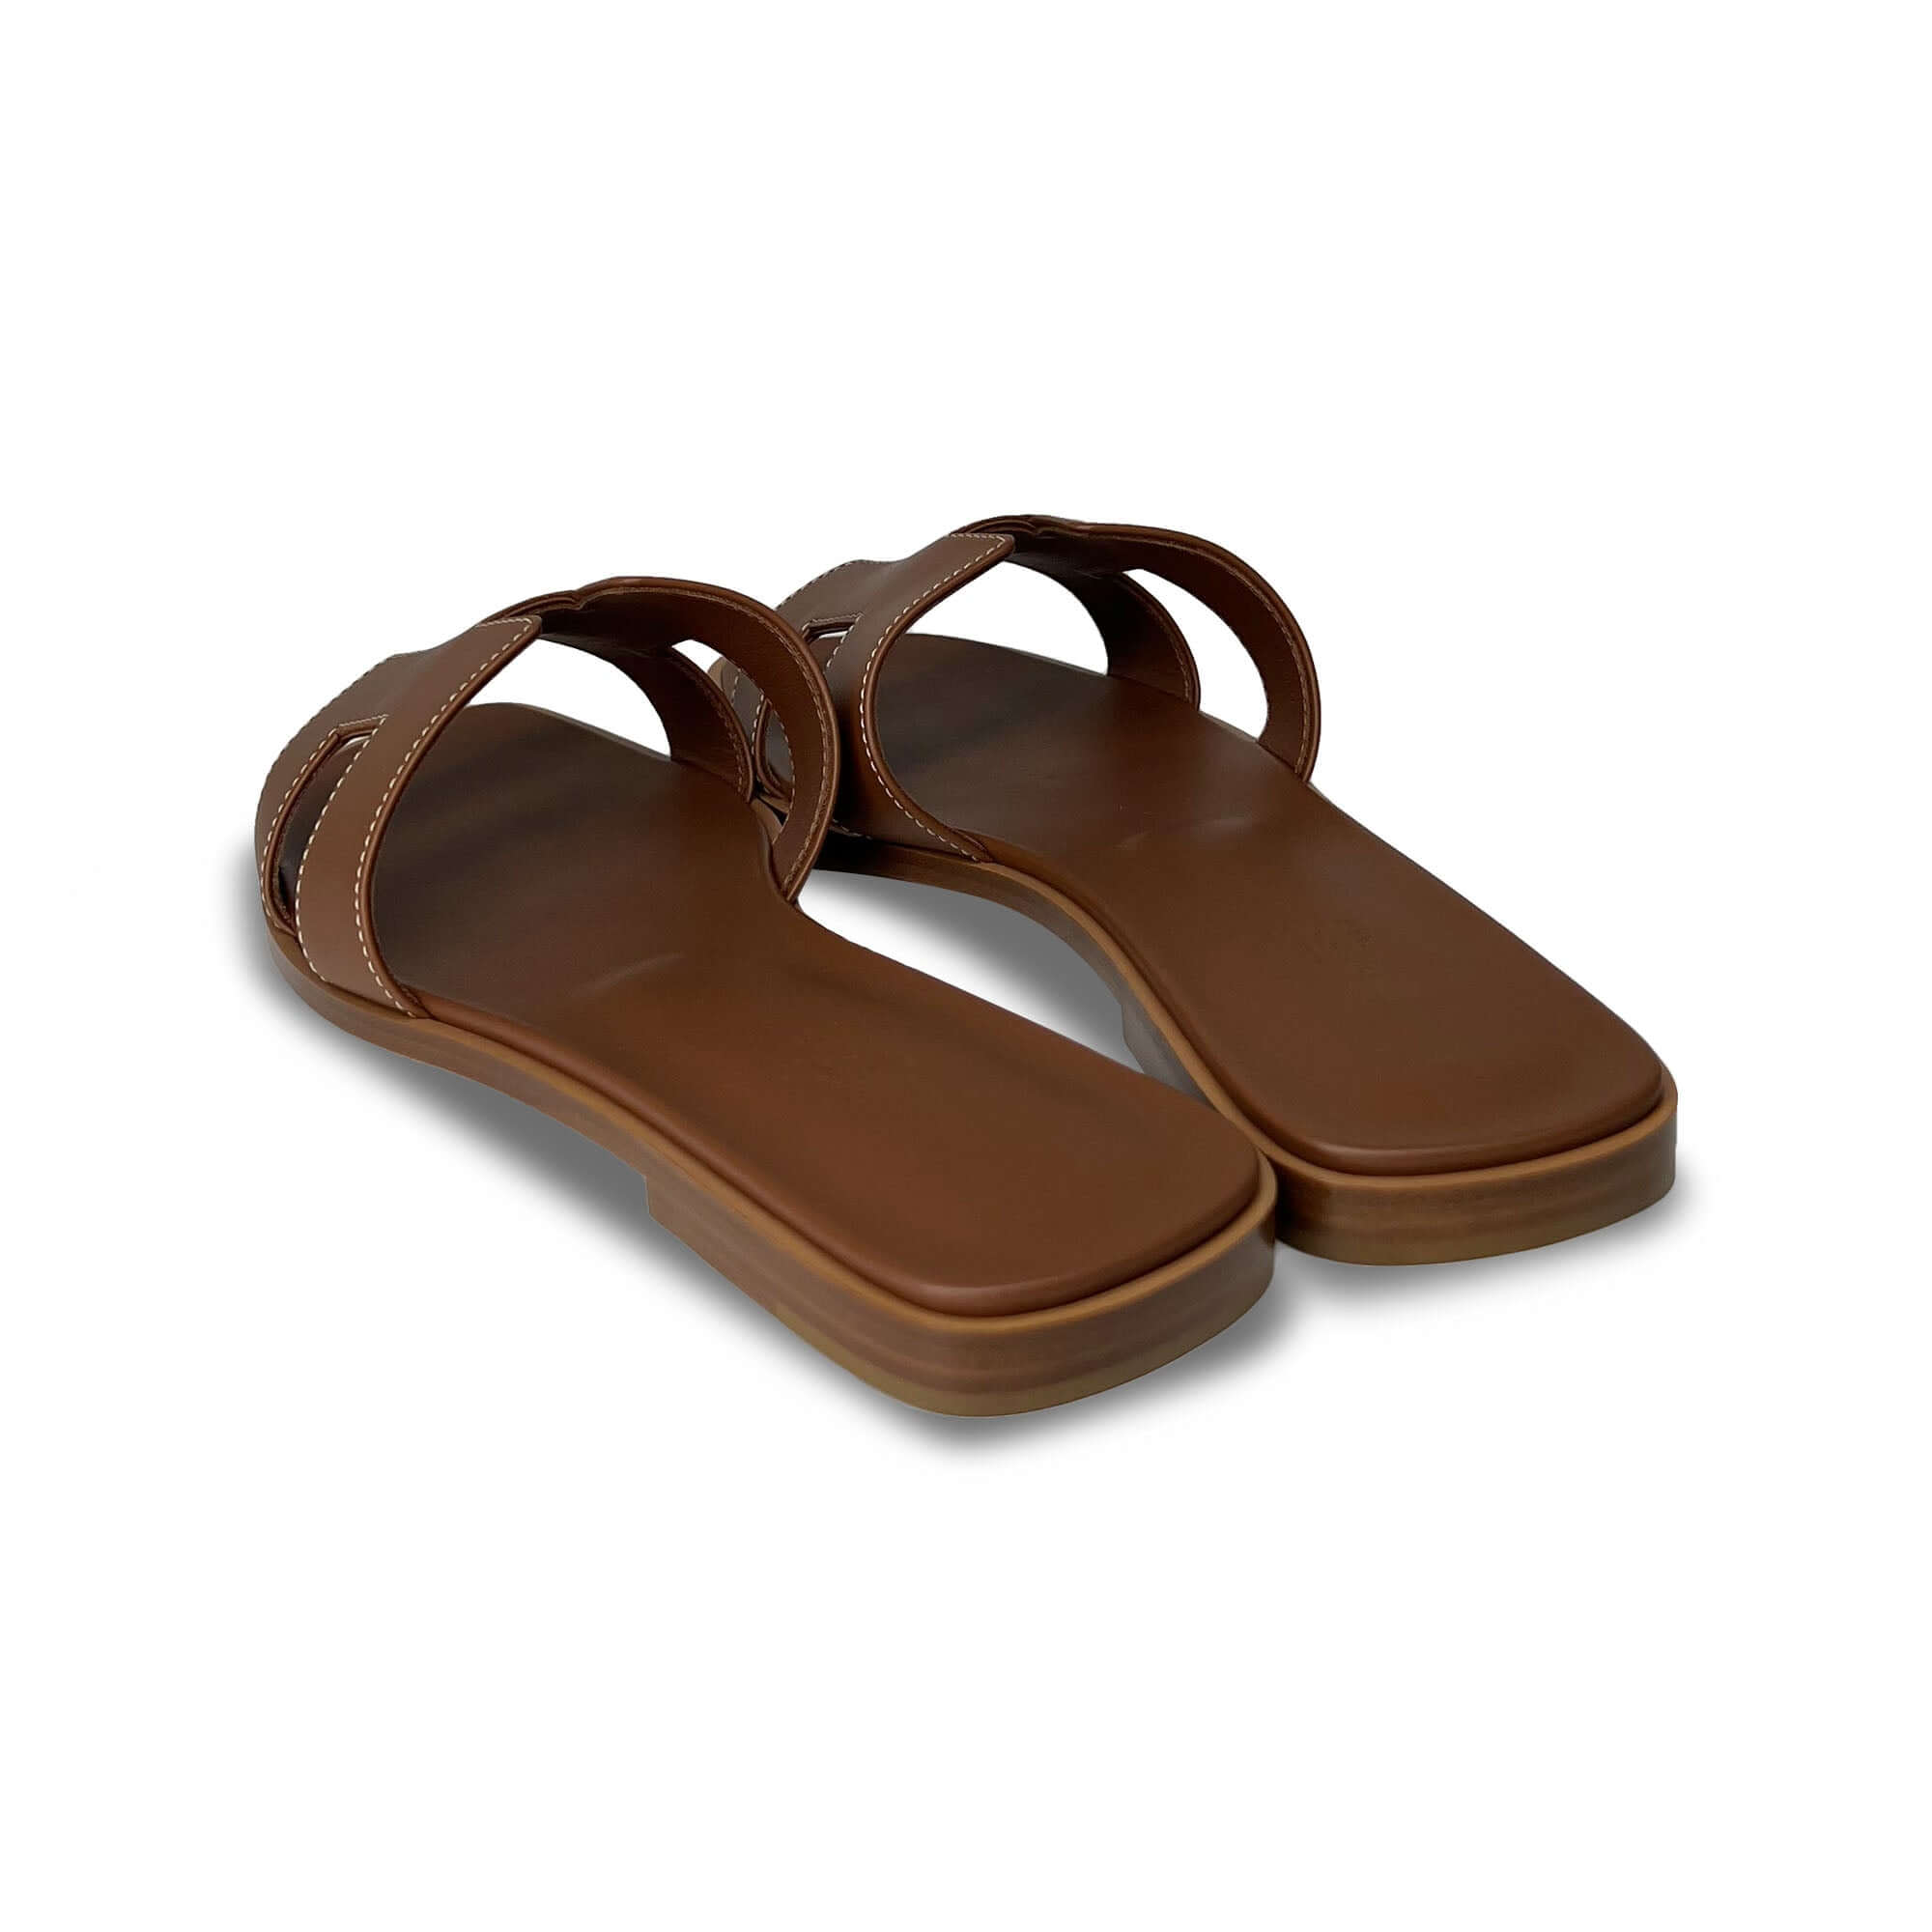 Hermes Oran Designer Leather Slippers in Brown back angle